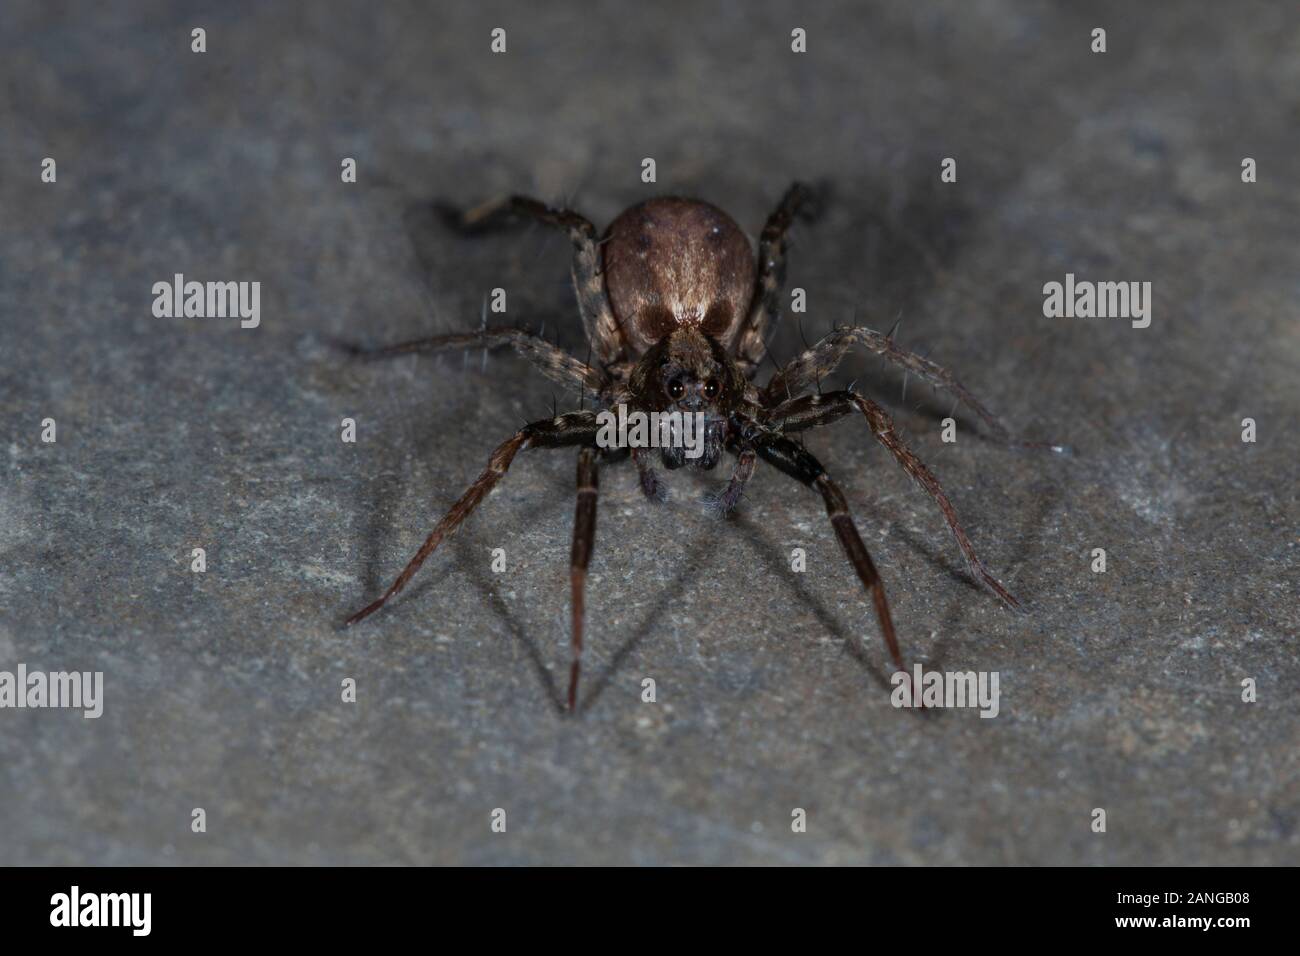 A ground dwelling spider form Eaglenest Wildlife Sanctuary, Arunachal Pradesh Stock Photo